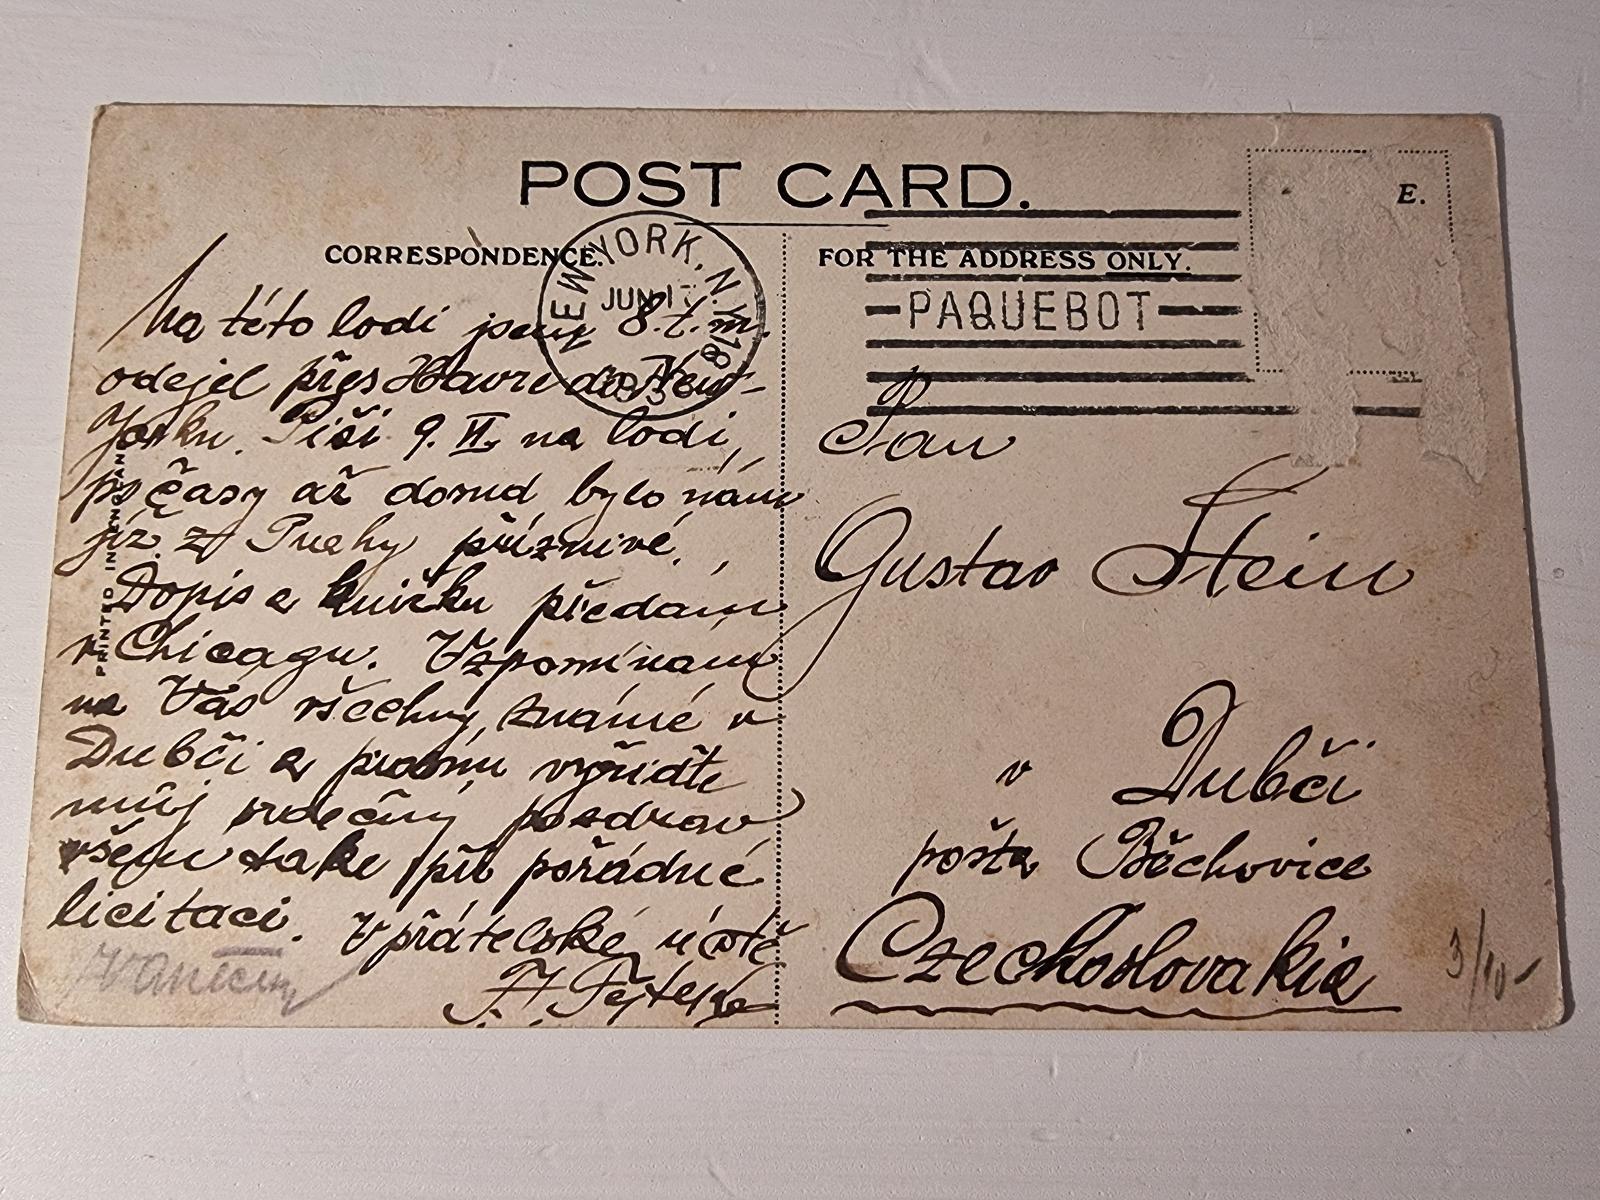 Stará pohlednice MF 1933 R.M.L. Lamaria Cunard Line Passenger Ship - Pohľadnice